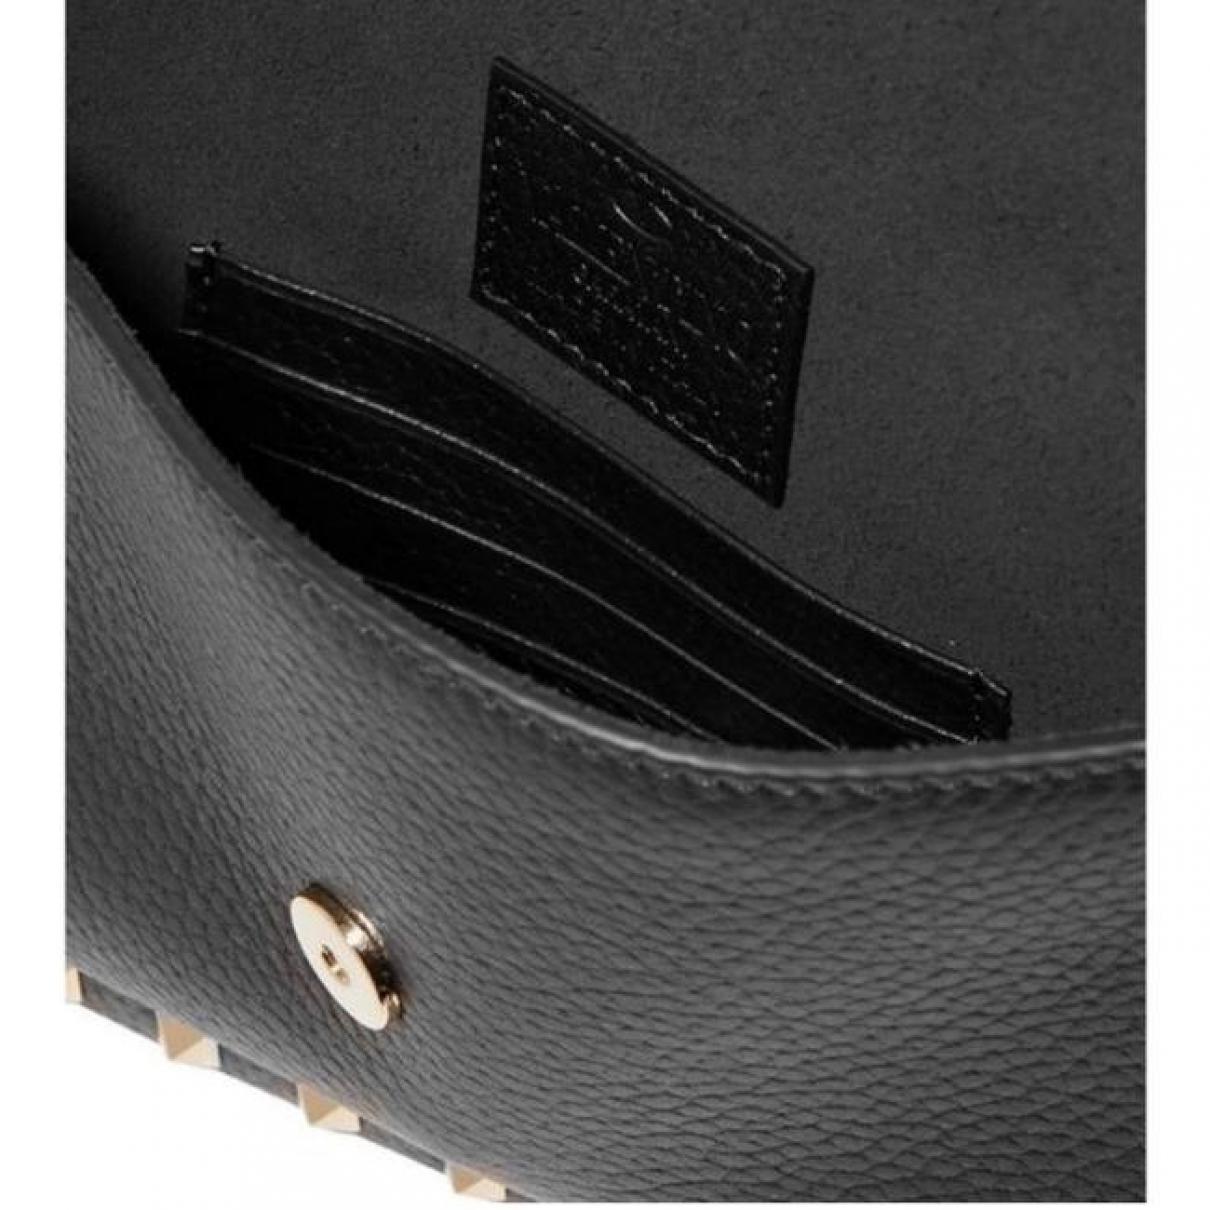 Leather clutch bag - 2